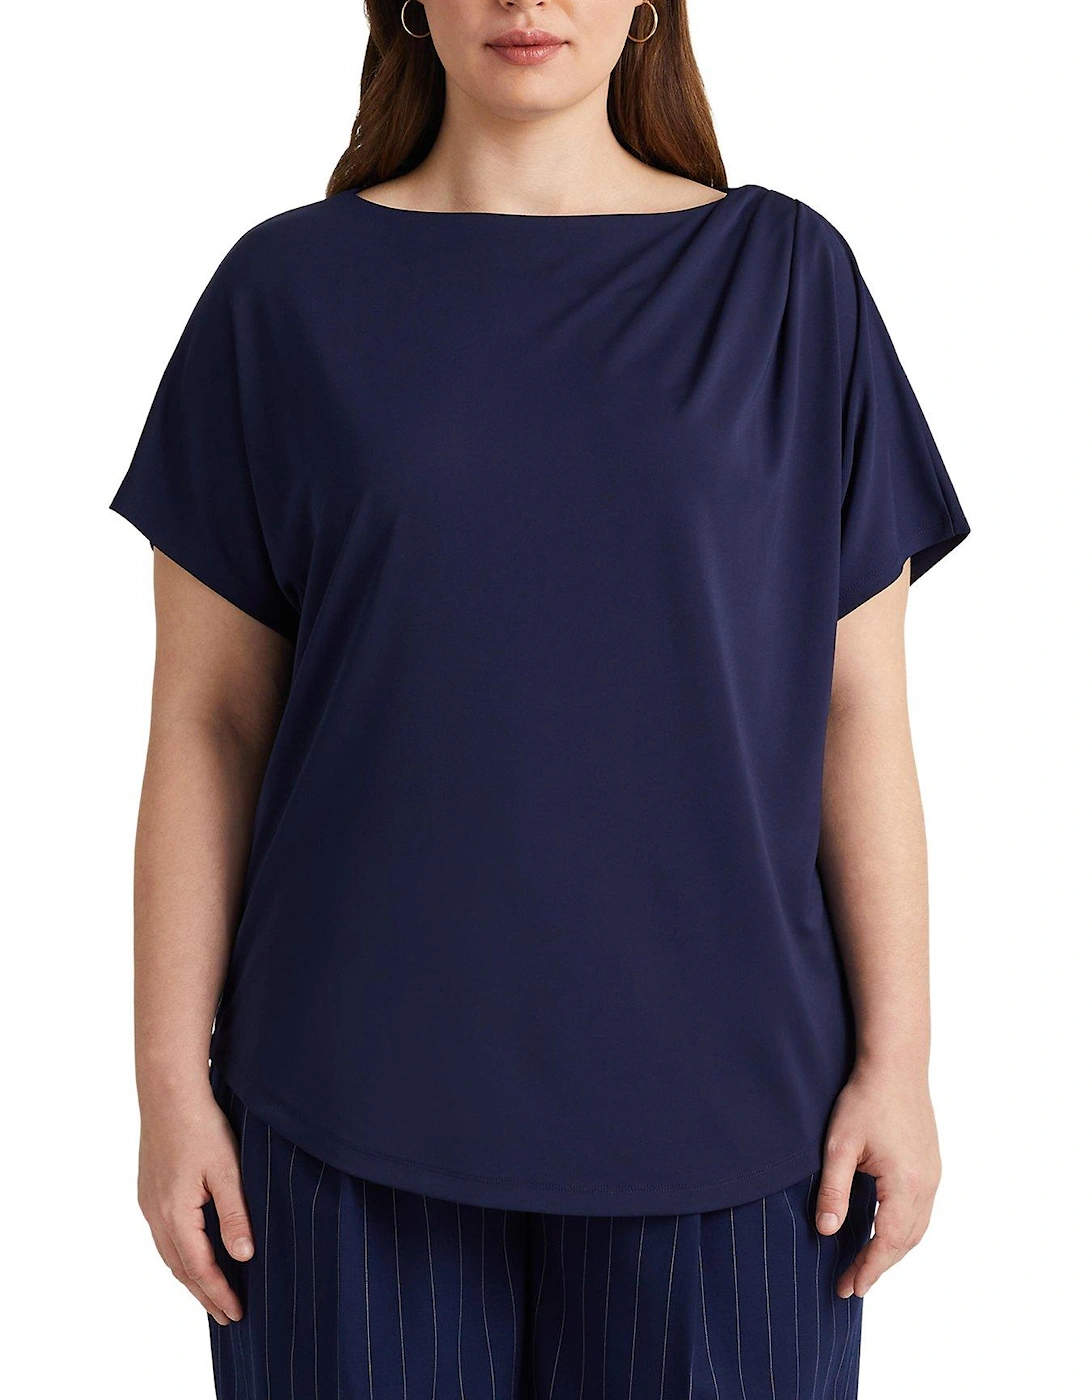 Yzabella-short Sleeve-t-shirt - French Navy, 5 of 4